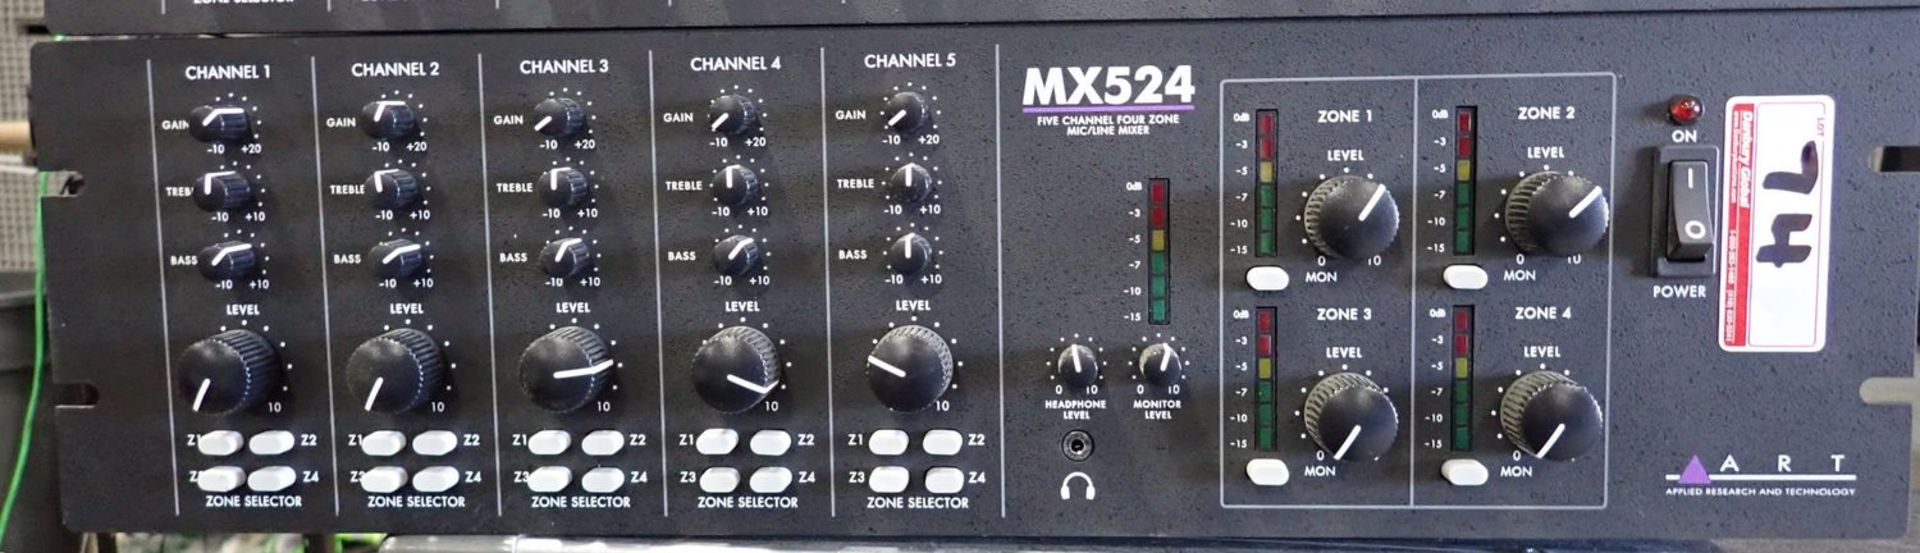 ART MX524 5-CHANNEL & 4-ZONE MIC LINE MIXER